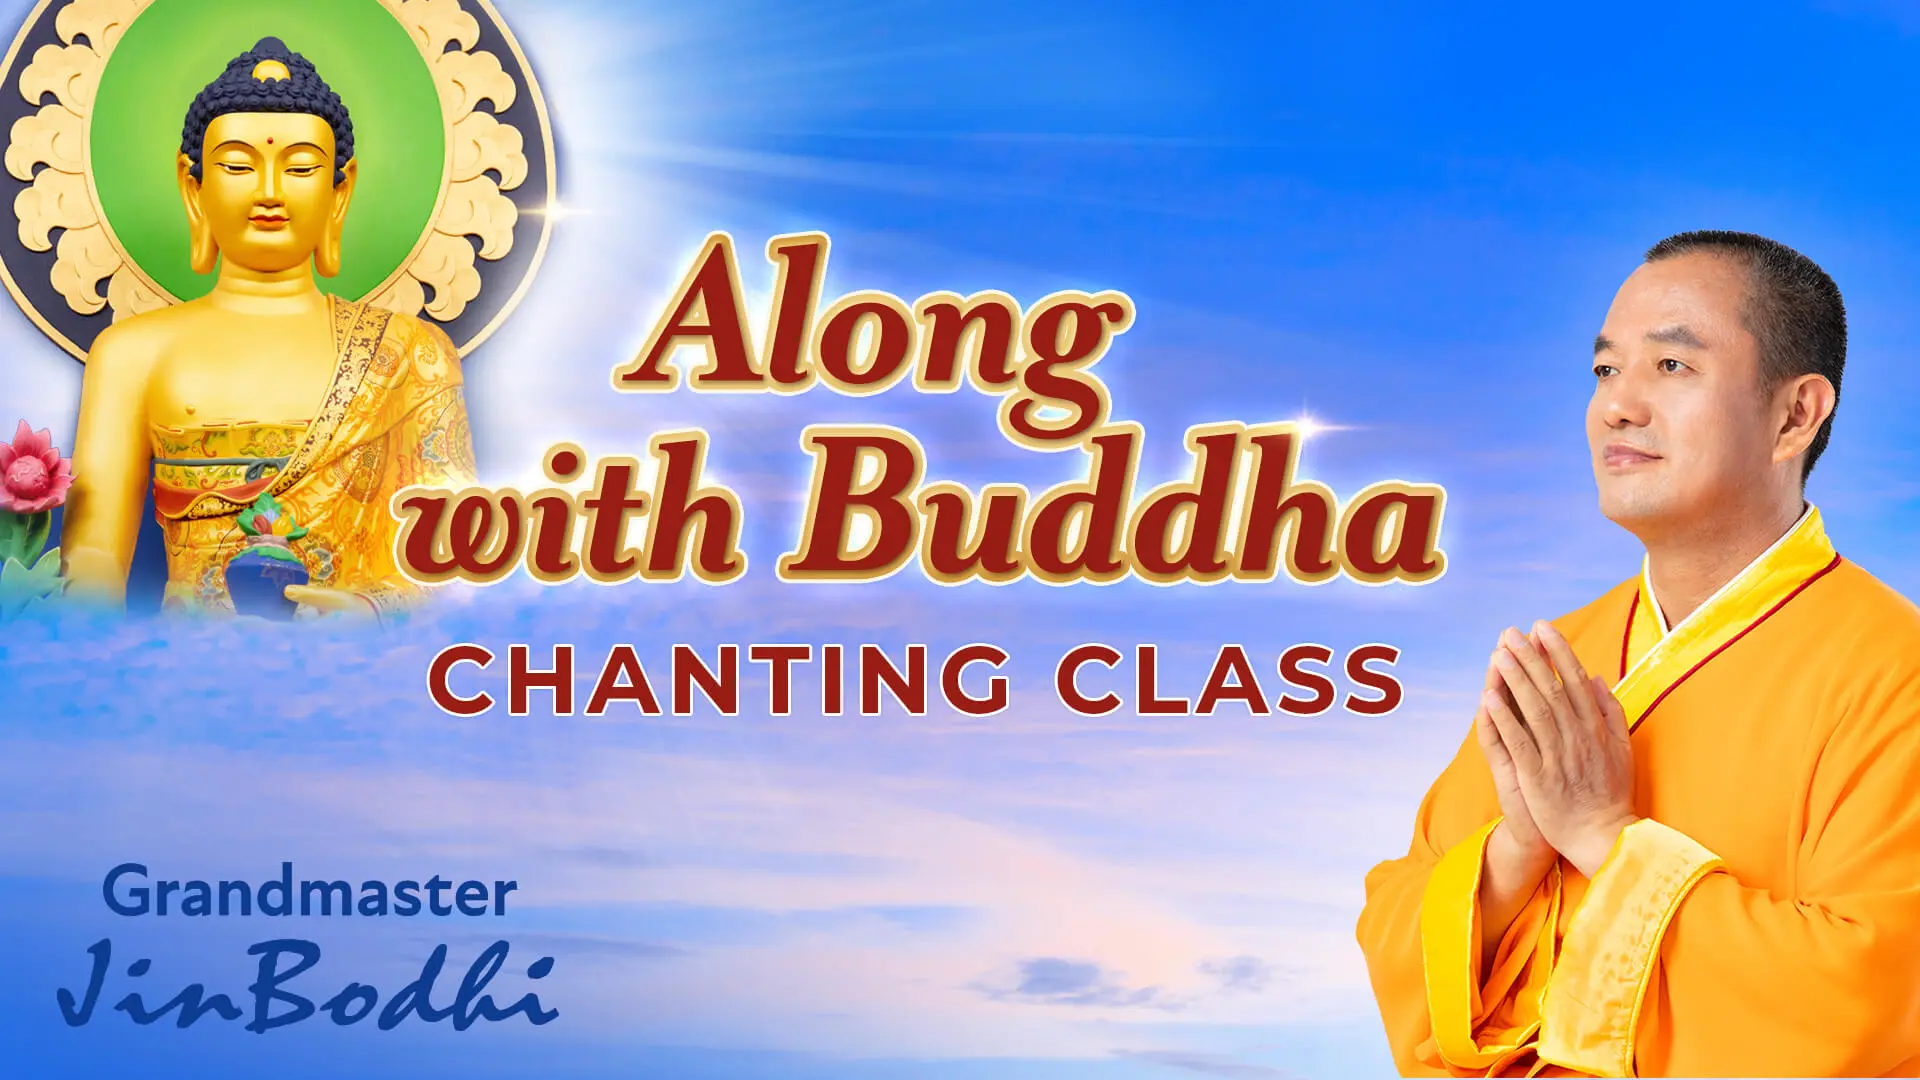 Bodhi Cha' ceremony promotes peace and harmony